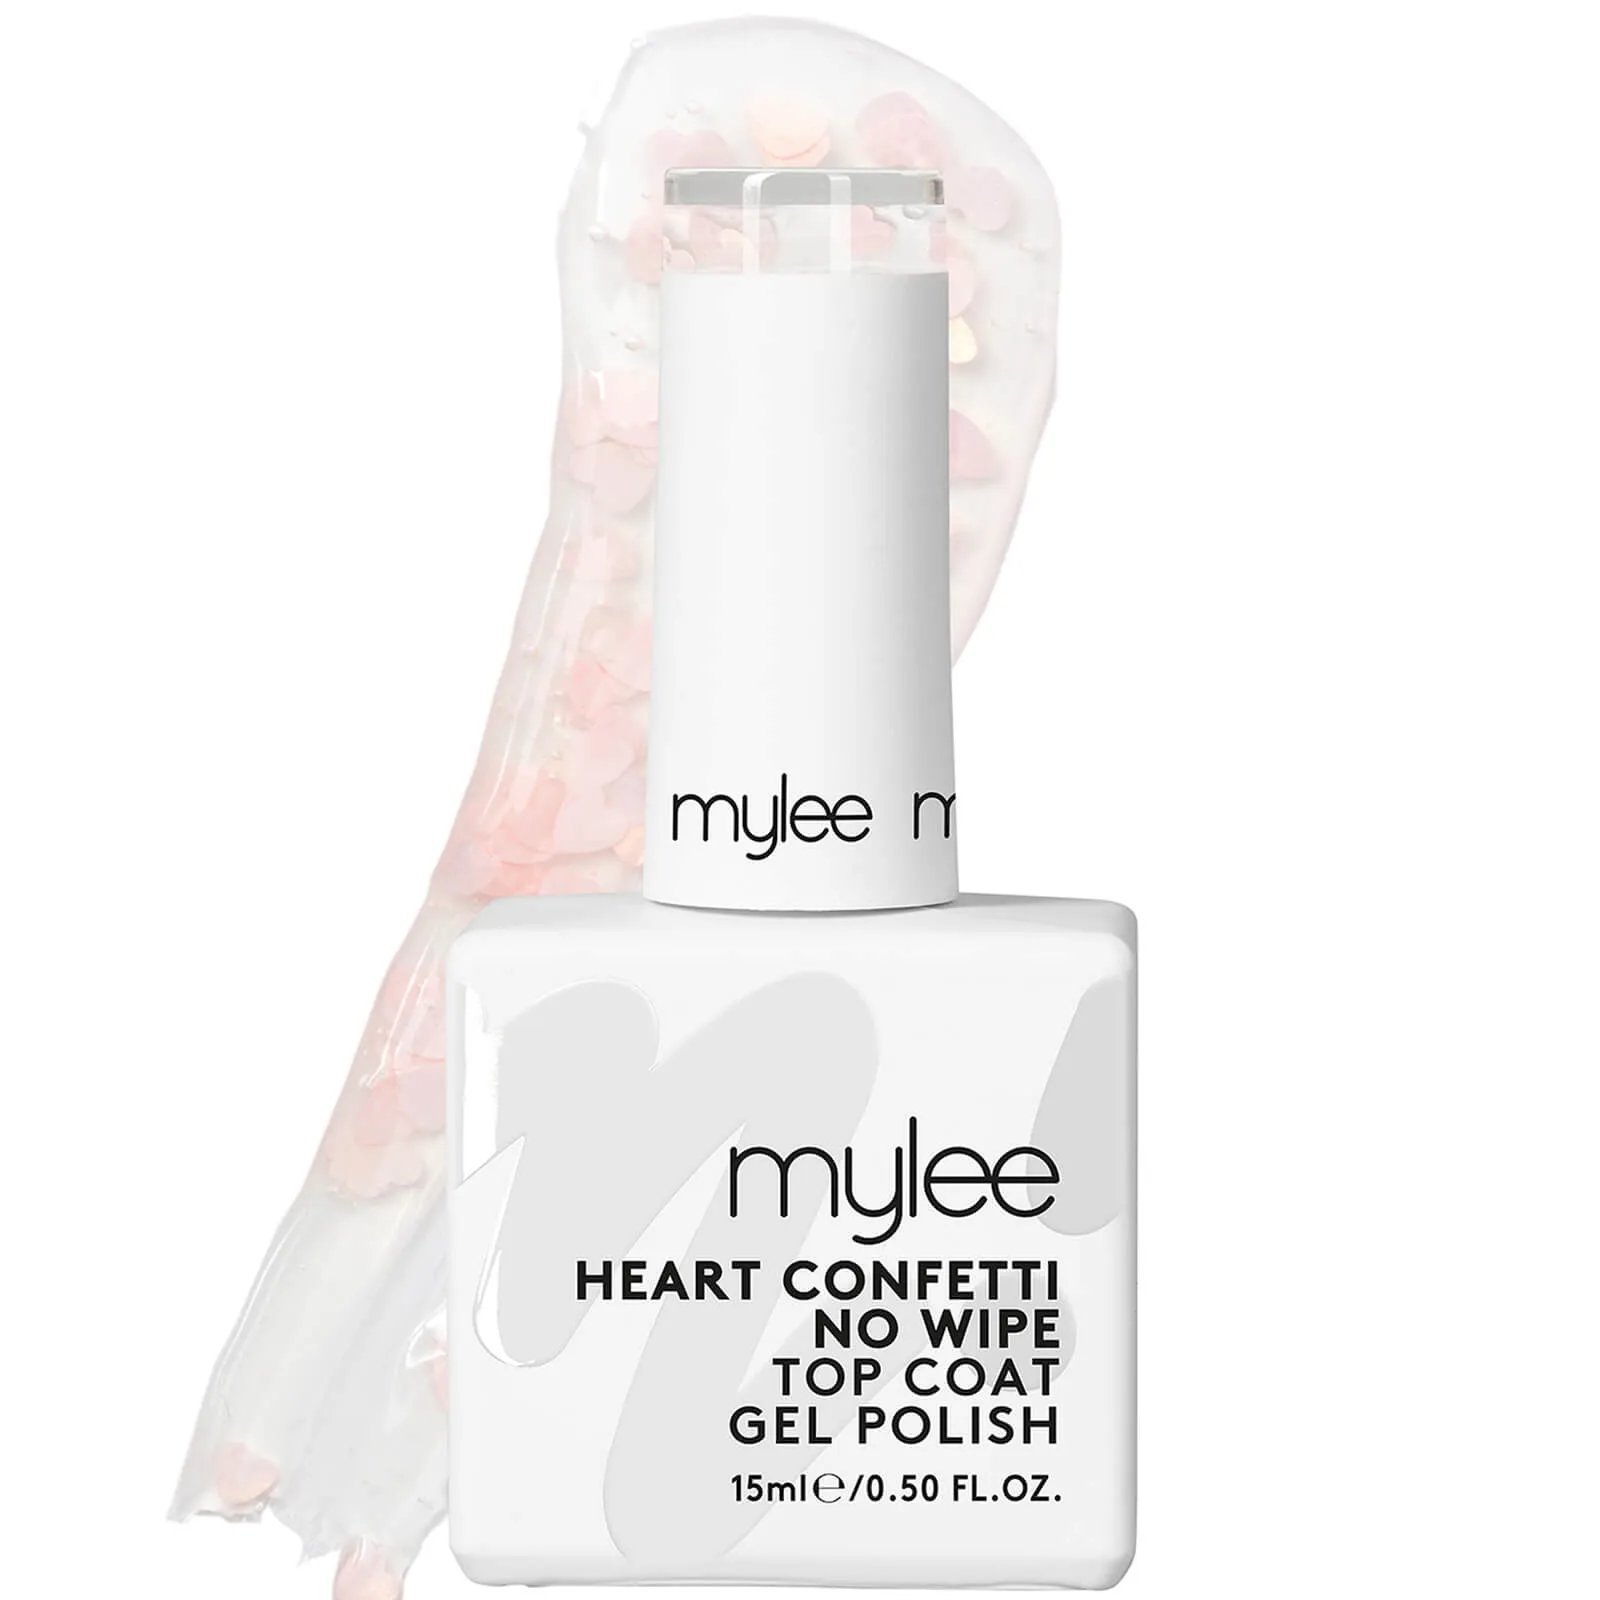  MyGel Gel Polish No Wipe Heart Confetti Top Coat 15ml